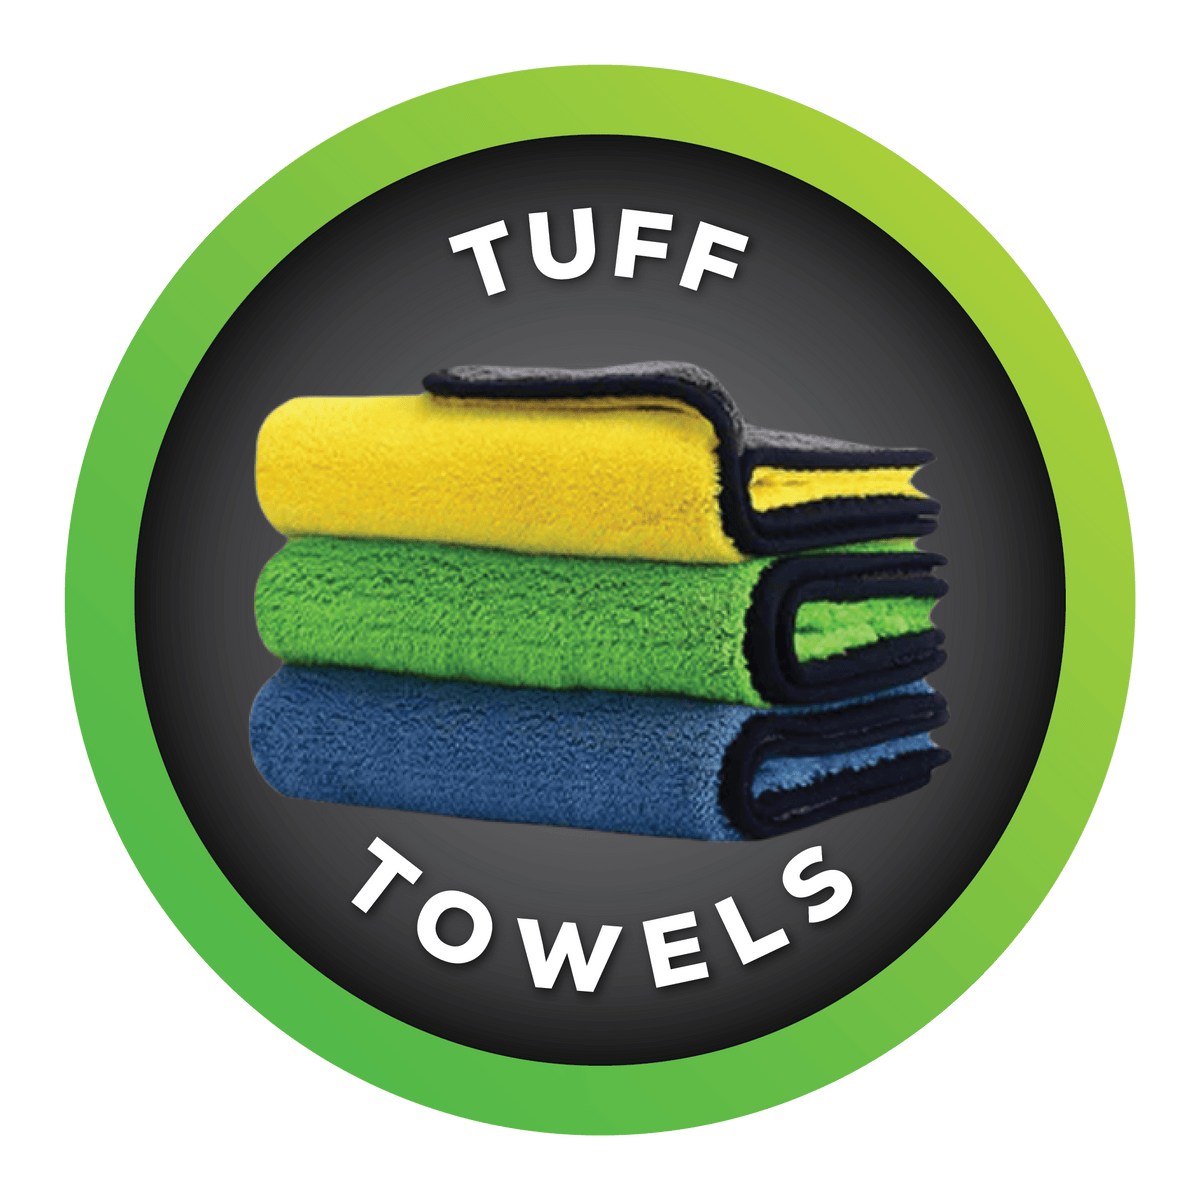 The Tuff Towel